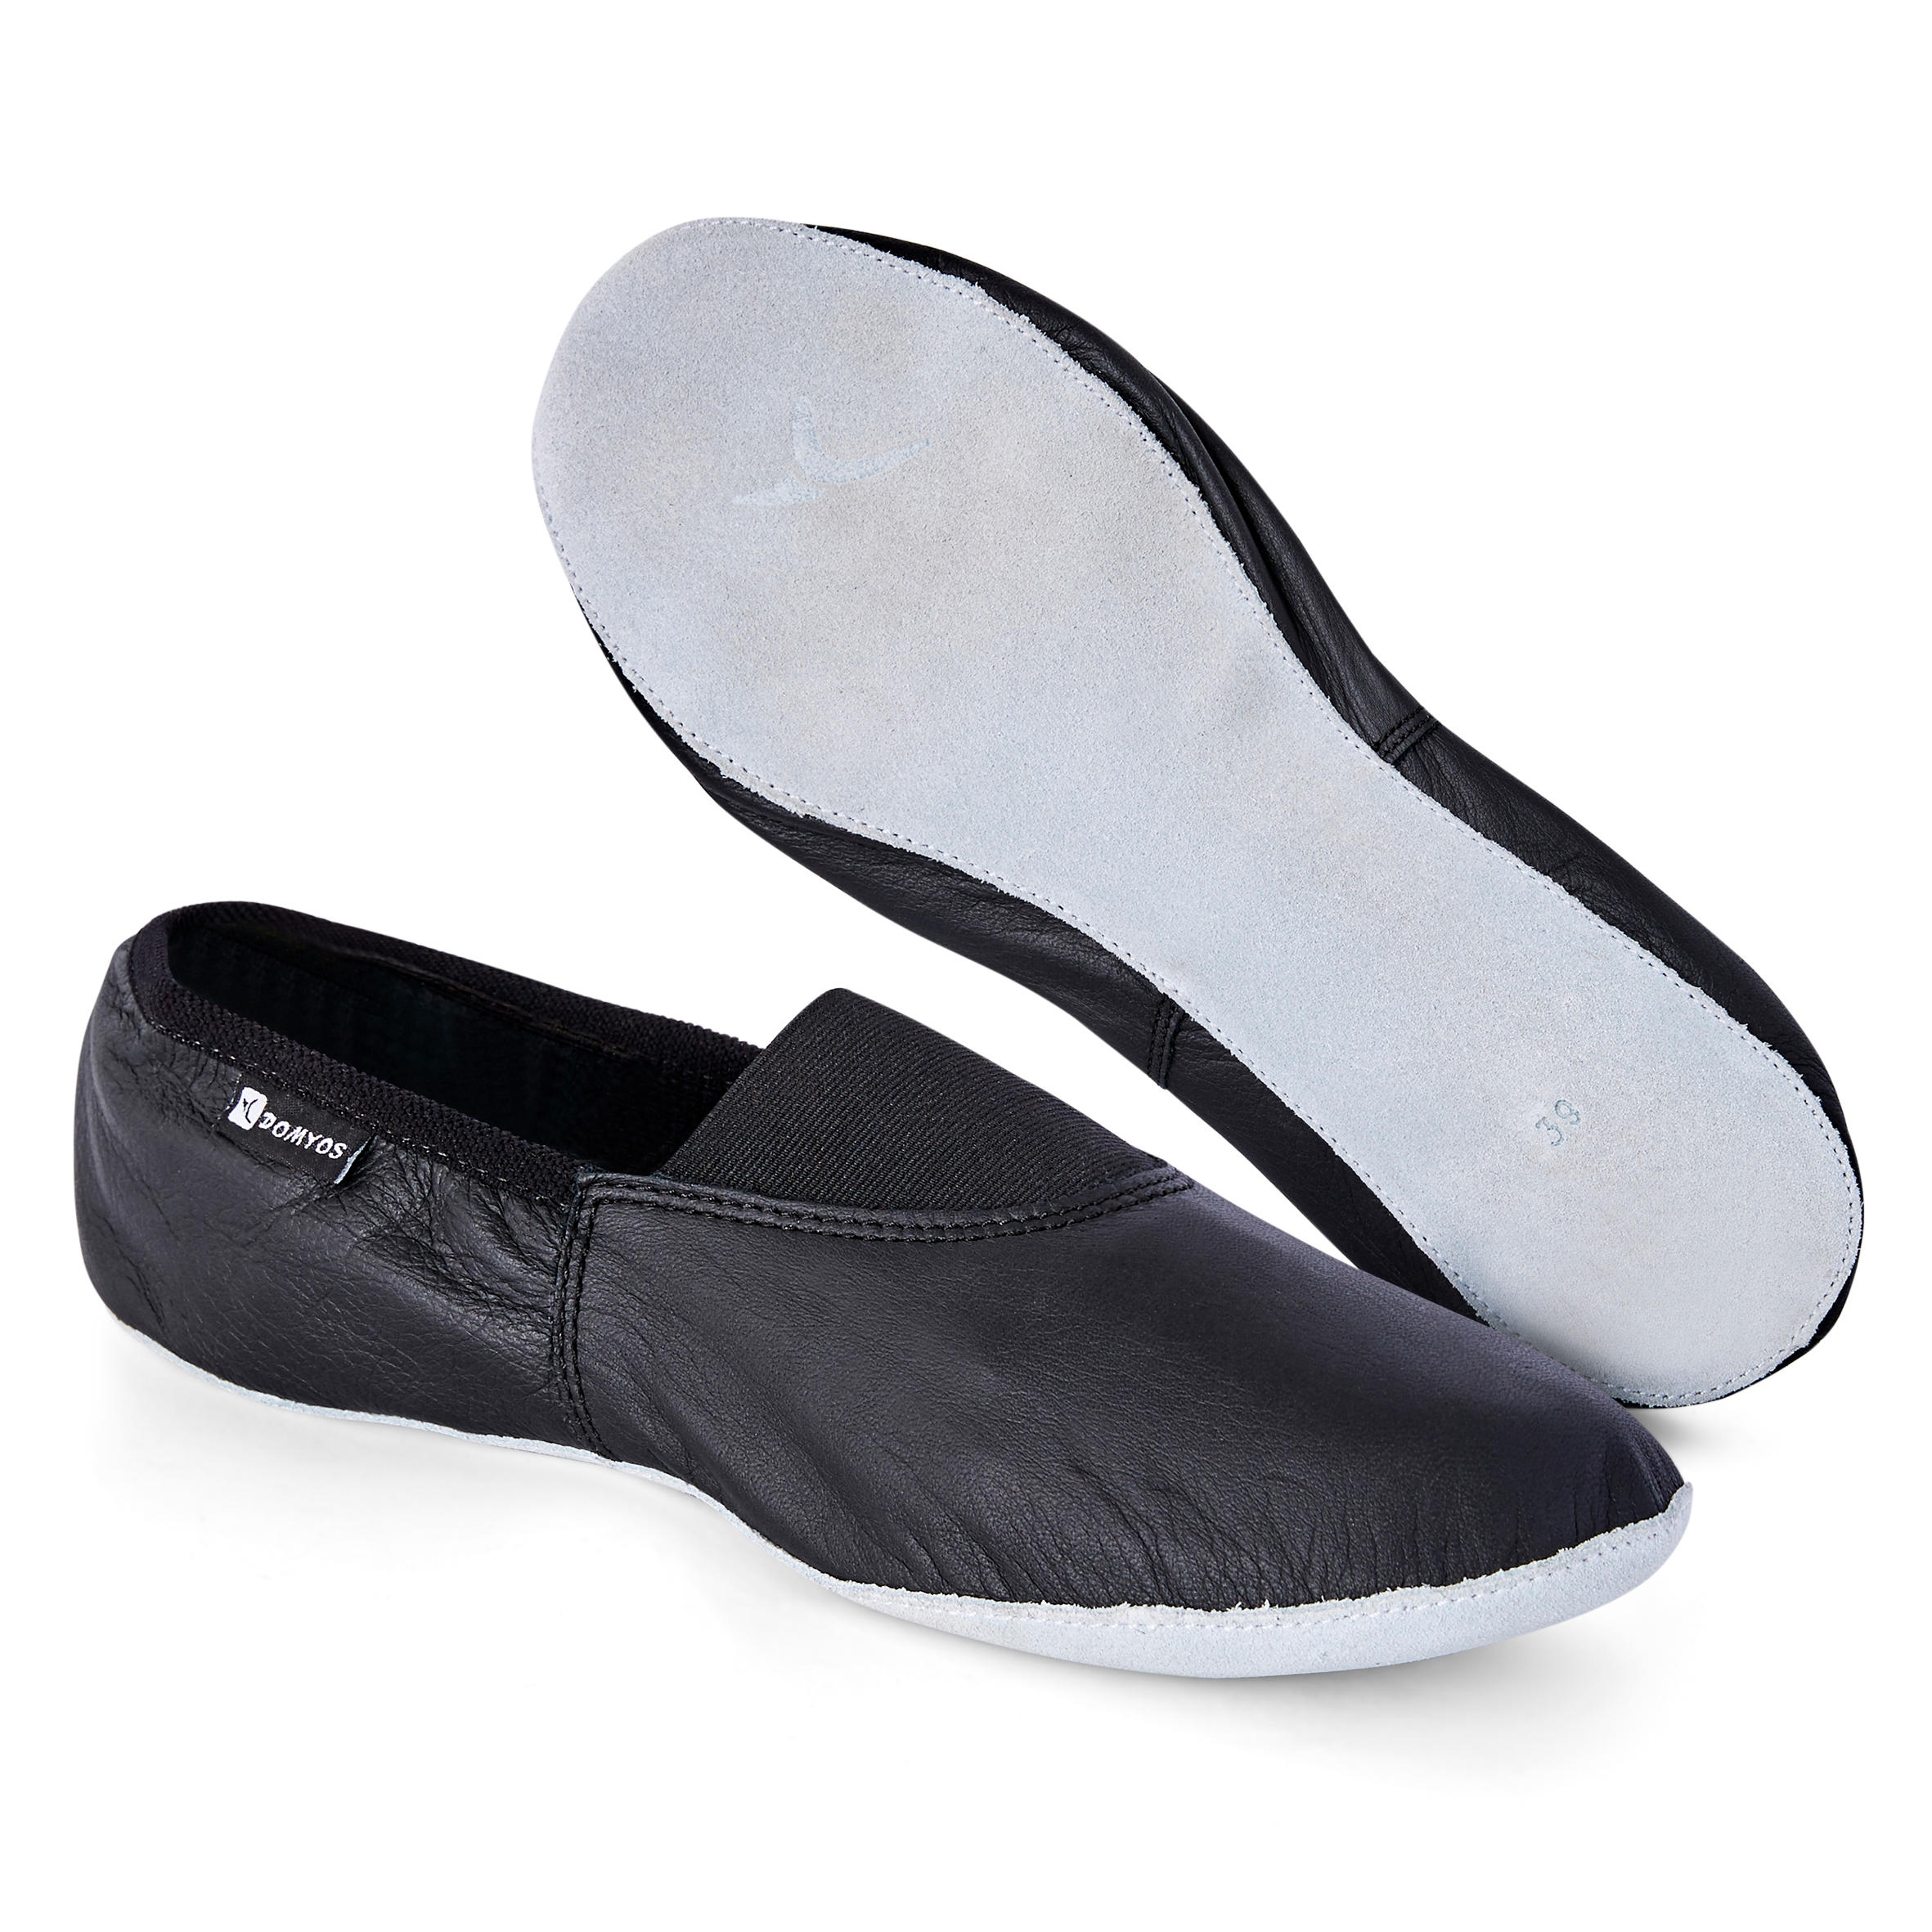 Modern Jazz Supple Leather Shoes - Black 5/5